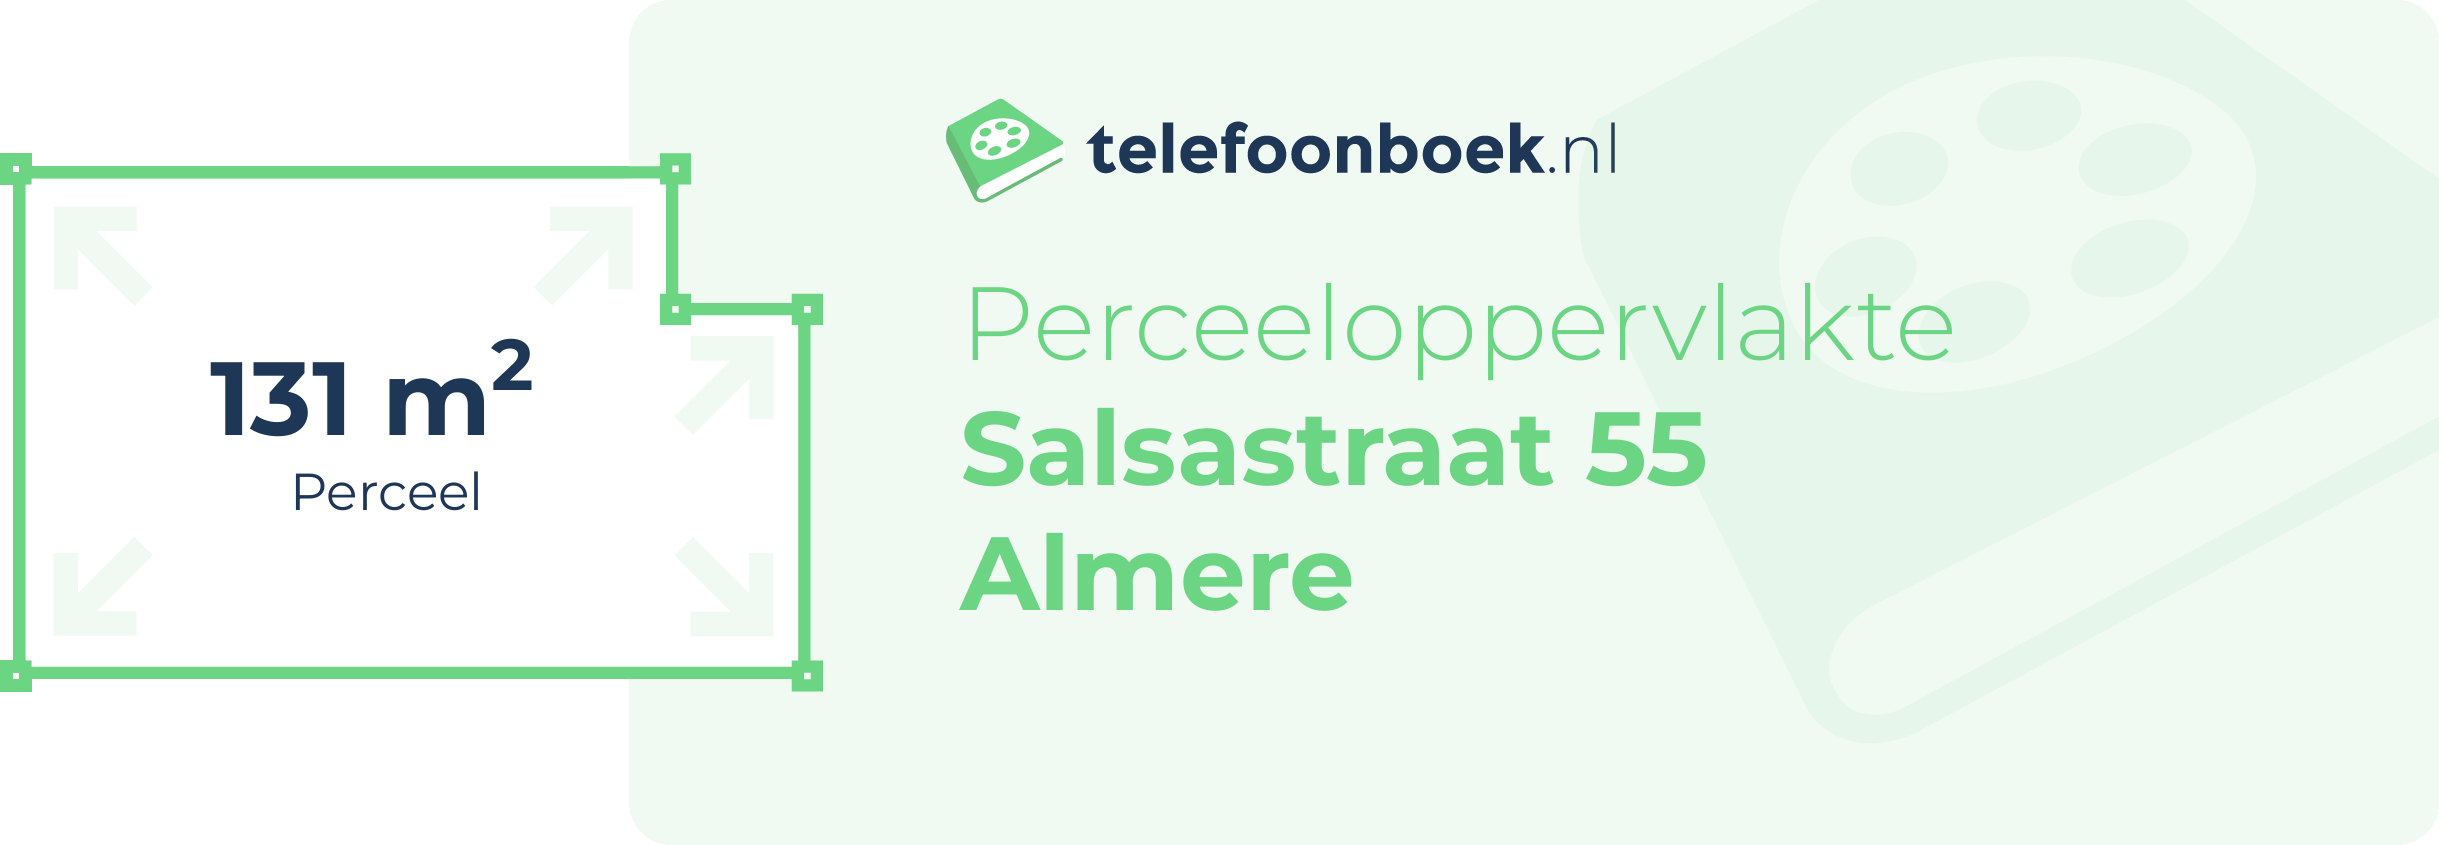 Perceeloppervlakte Salsastraat 55 Almere